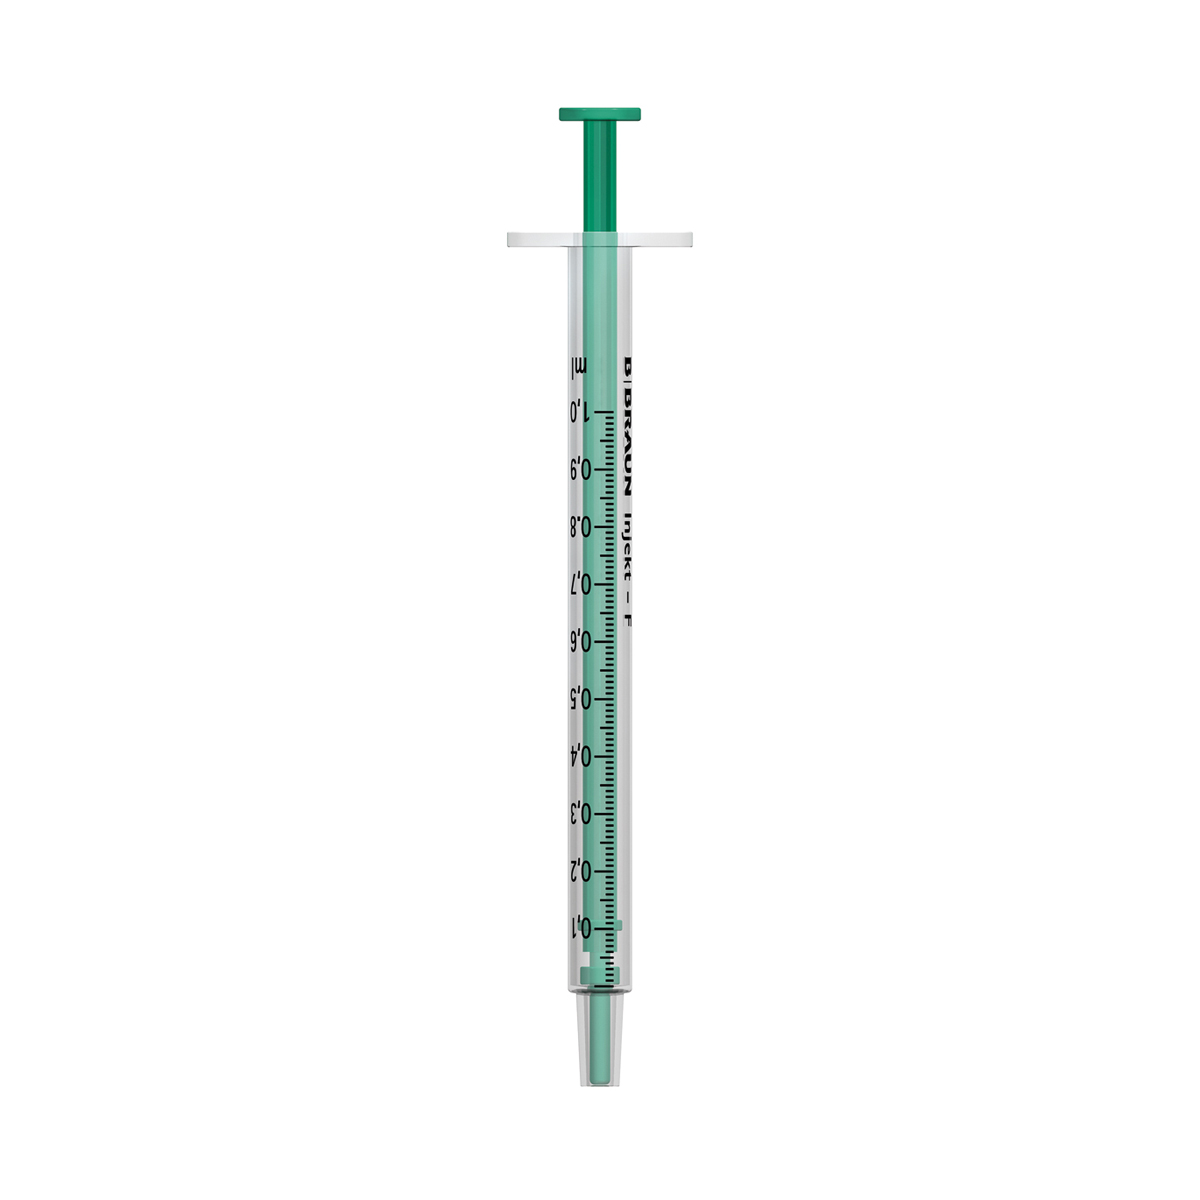 BBraun Injekt 1ml Reduced Dead Space Syringe Barrel